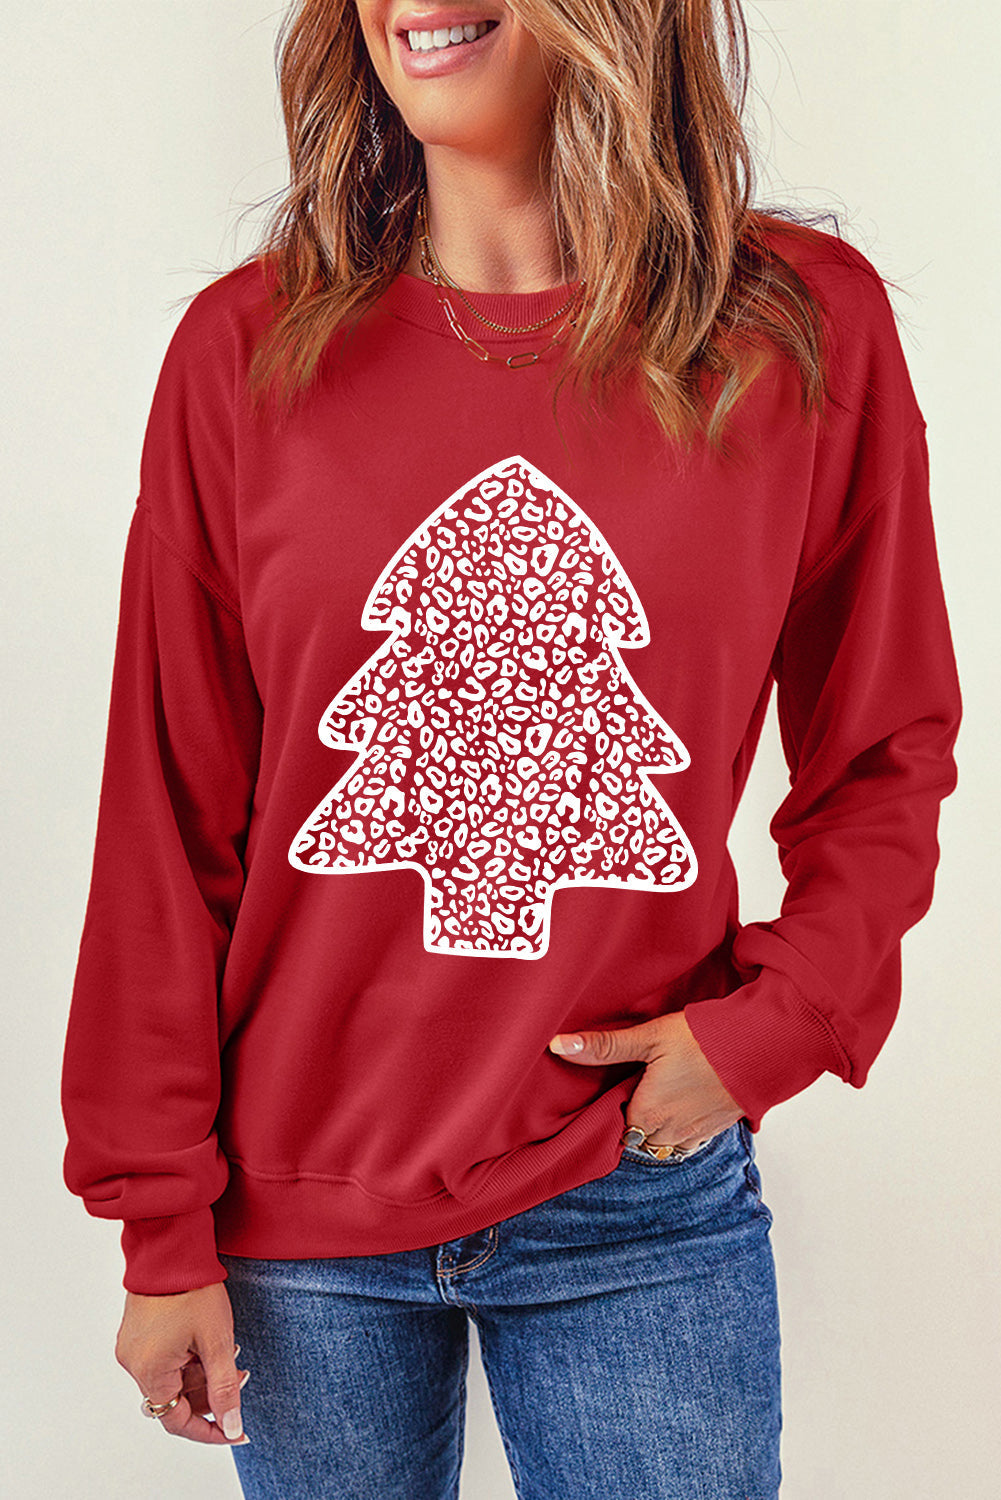 Red Leopard Christmas Tree Print Pullover Graphic Sweatshirt